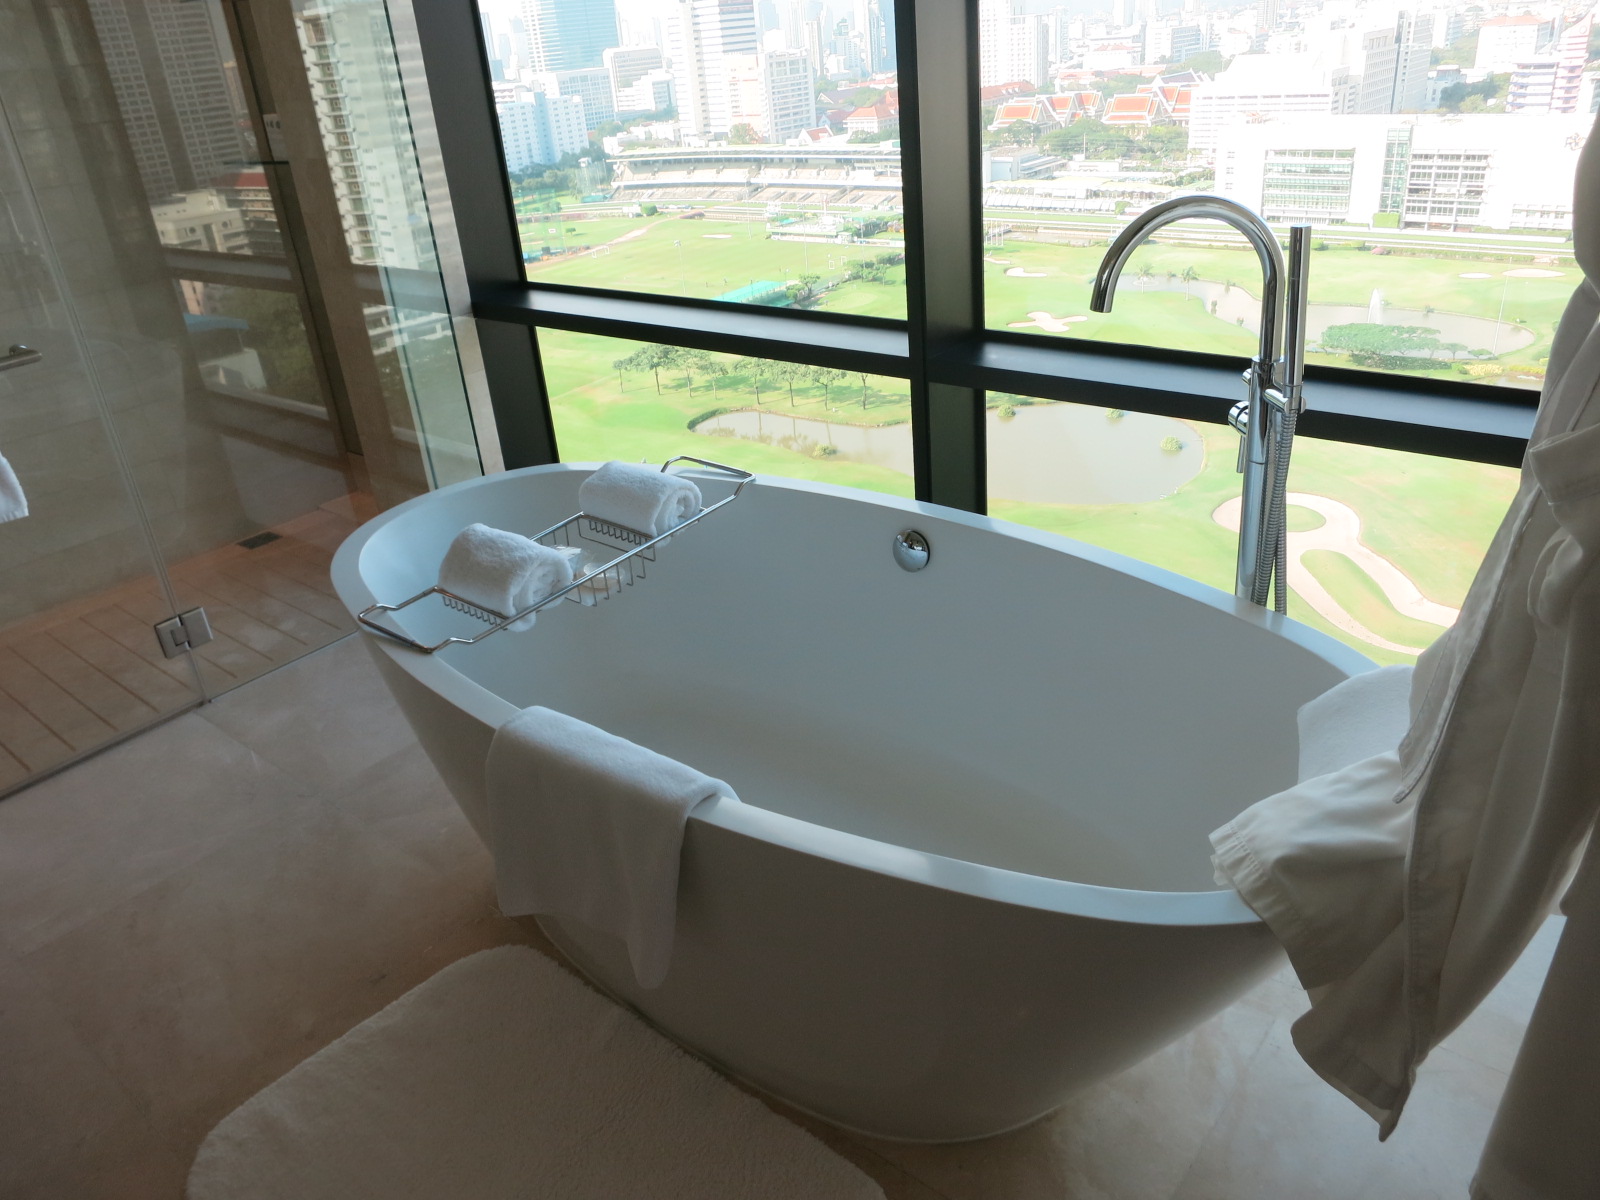 St. Regis Bangkok hotel Caroline Astor Suite bathroom tub